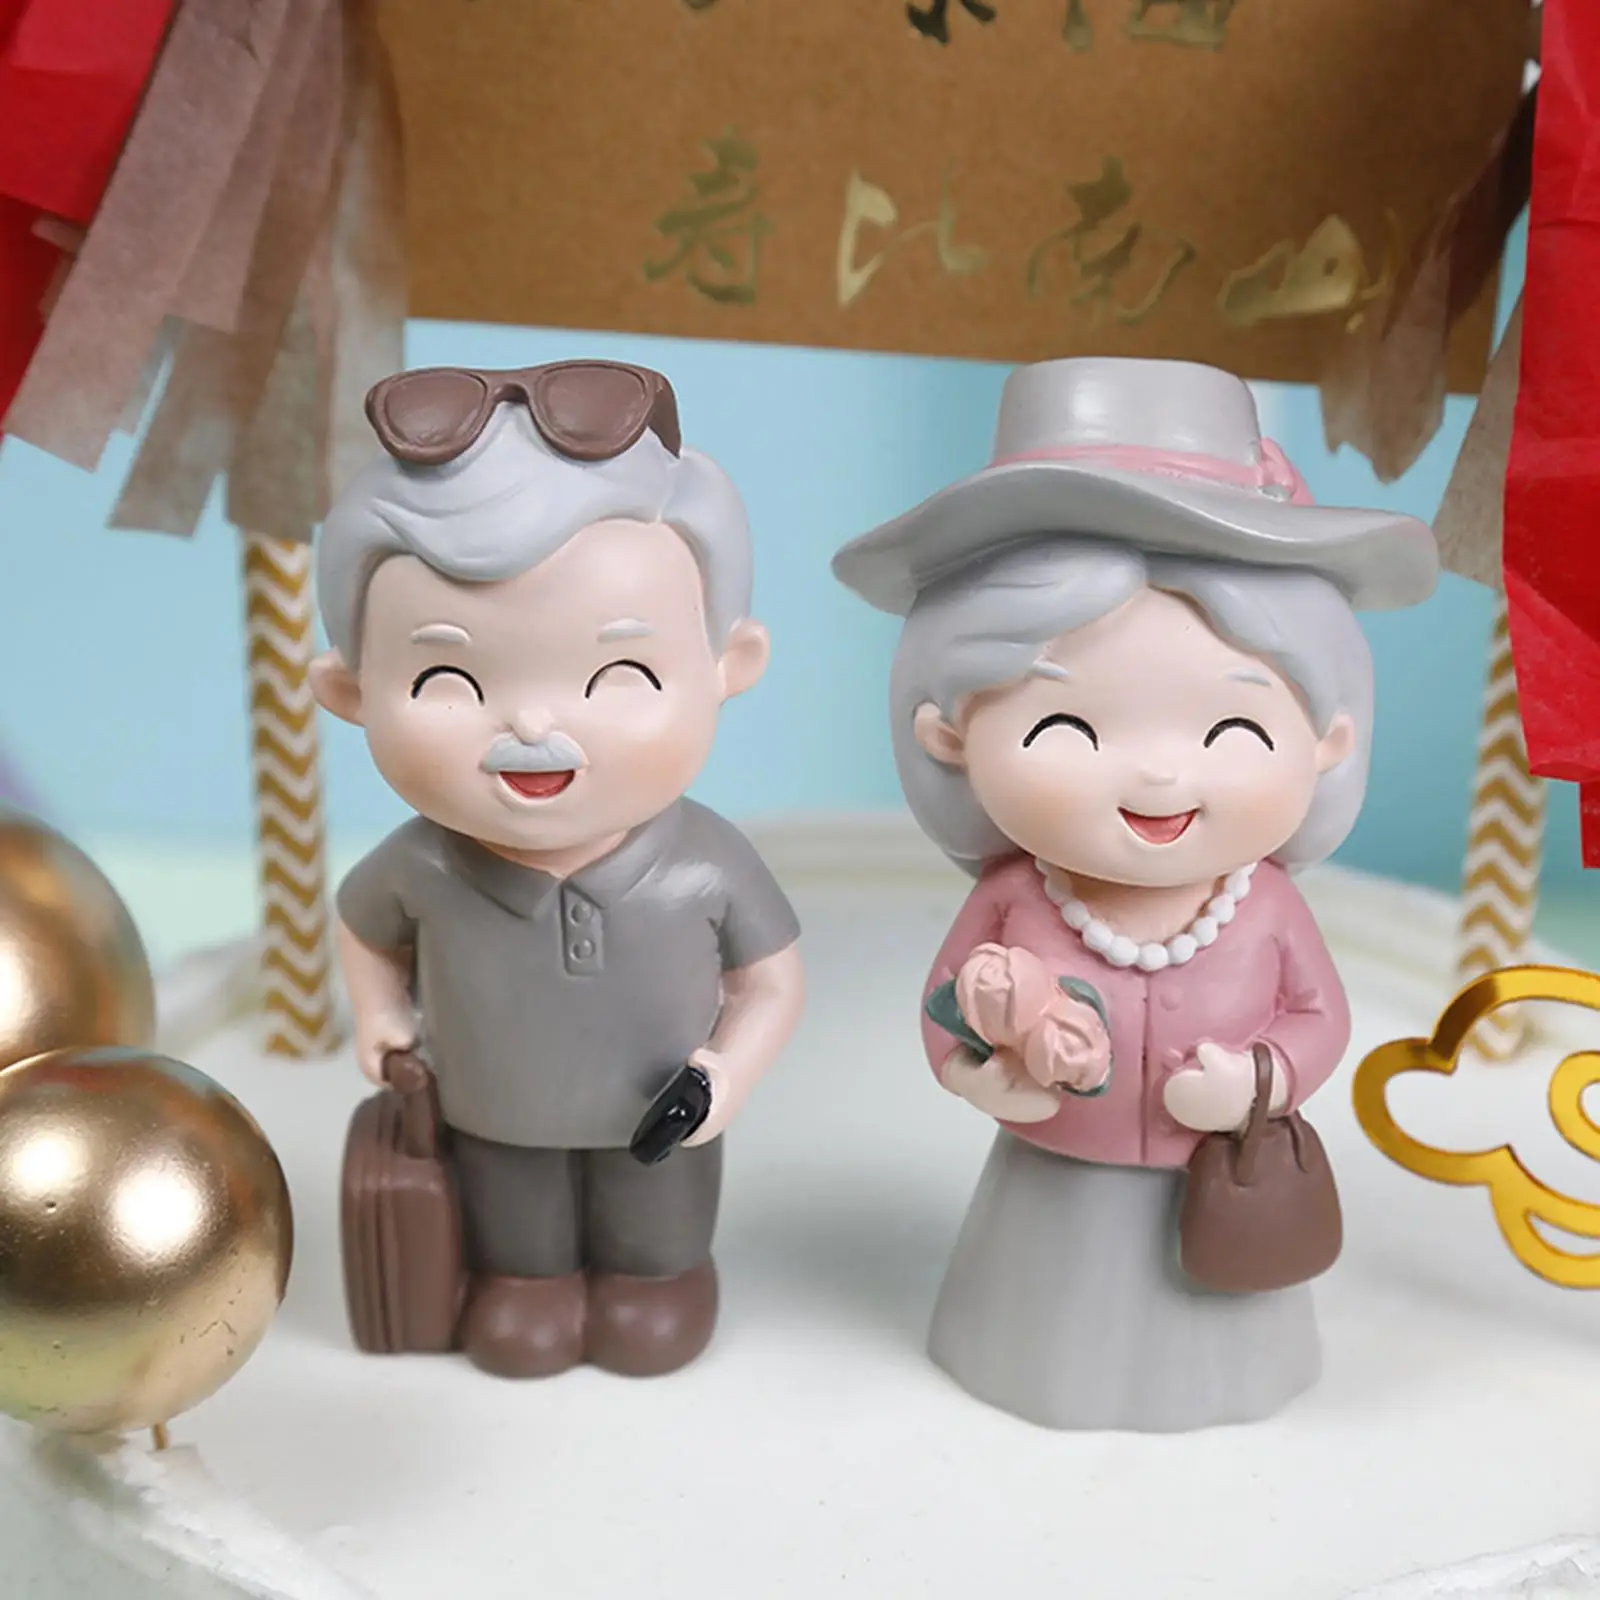 Elderly Figurine Cake Topper Ornaments for Birthday Anniversary Home Garden Decoration